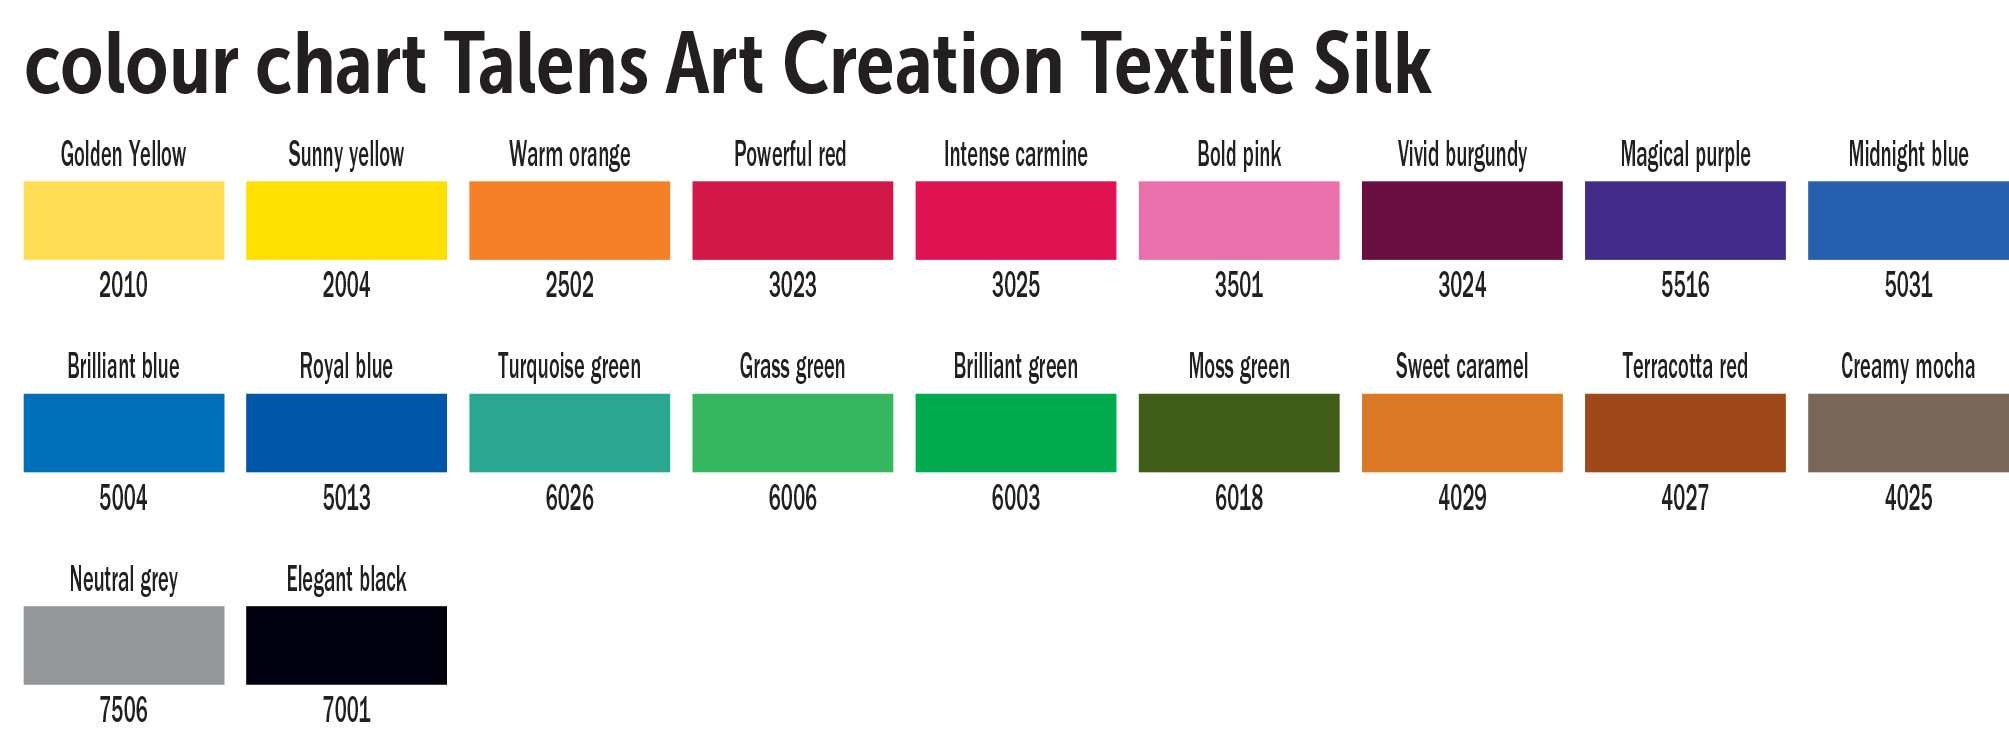 TAC Textile silk colour chart